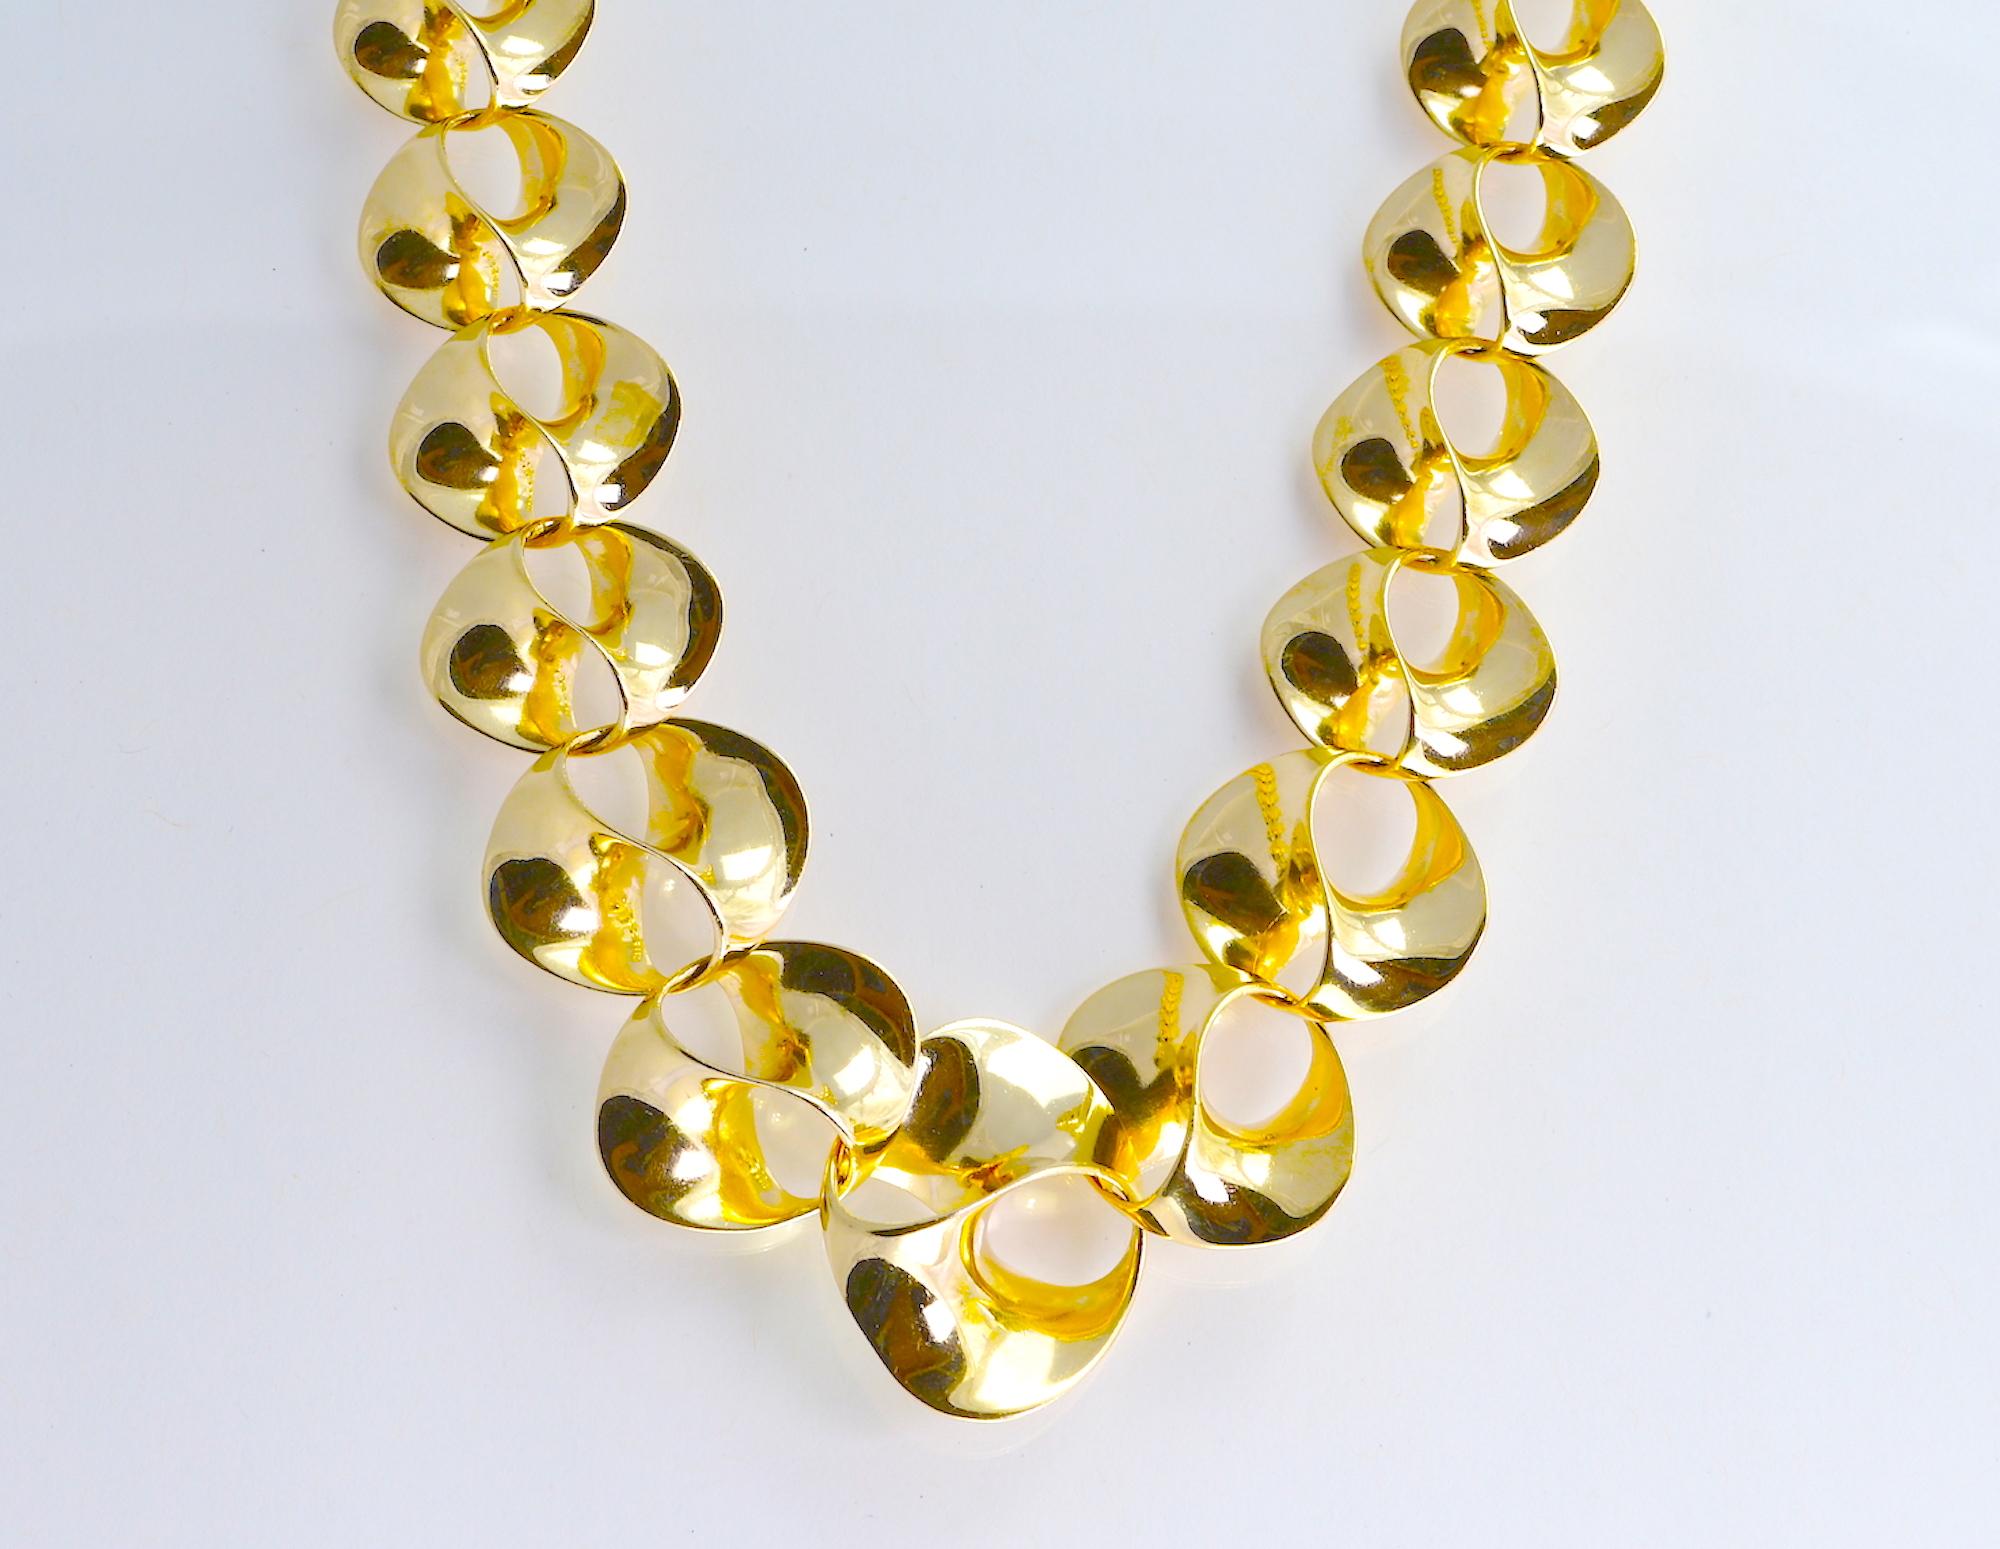 Swirl Style Chain Yellow Gold 14K 50.40 GRAMS 17